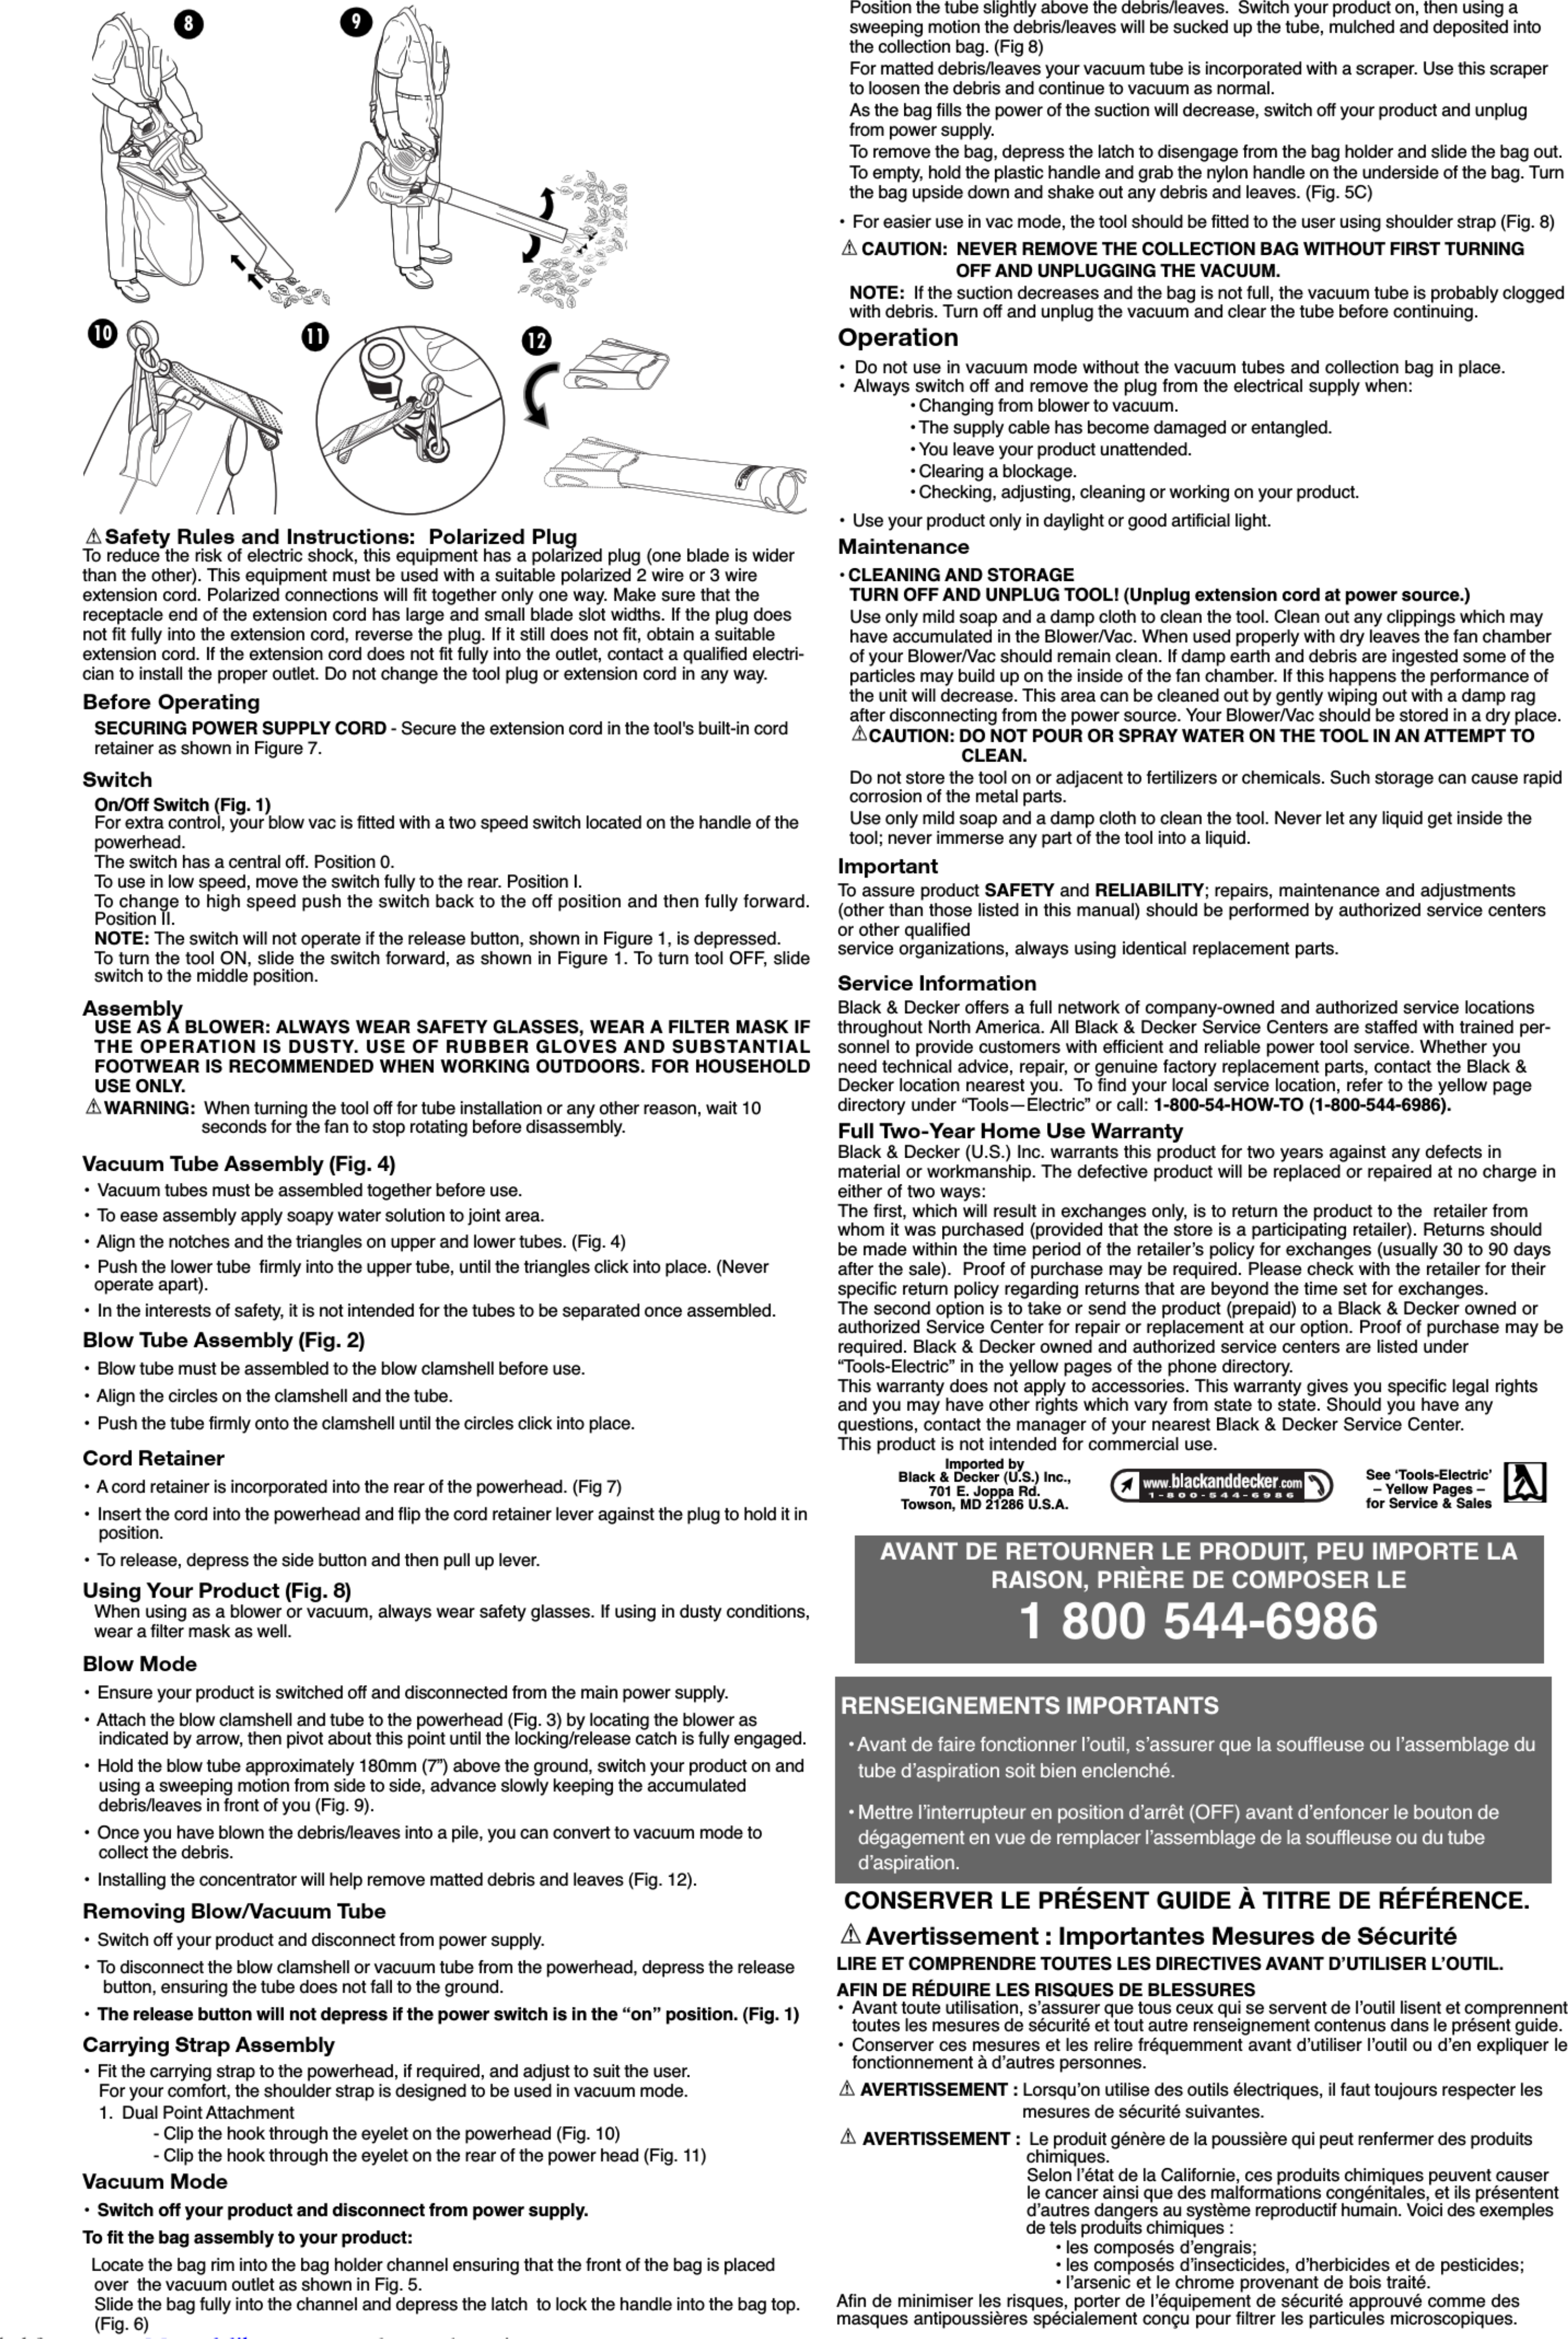 Page 2 of 5 - Black-And-Decker Black-And-Decker-Leaf-Hog-Bv4000-Instruction-Manual-1002745 User Manual